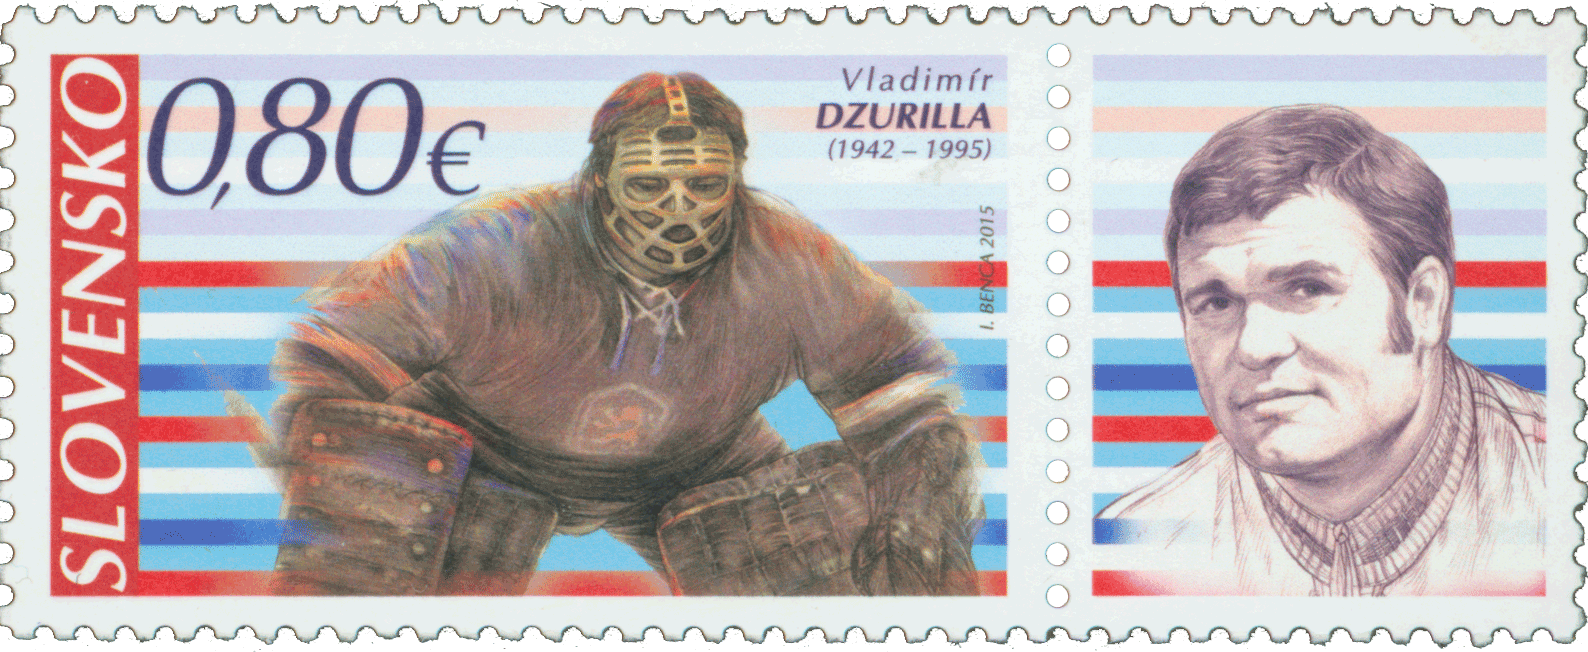 585 - Sport: Vladimír Dzurilla (1942 – 1995)